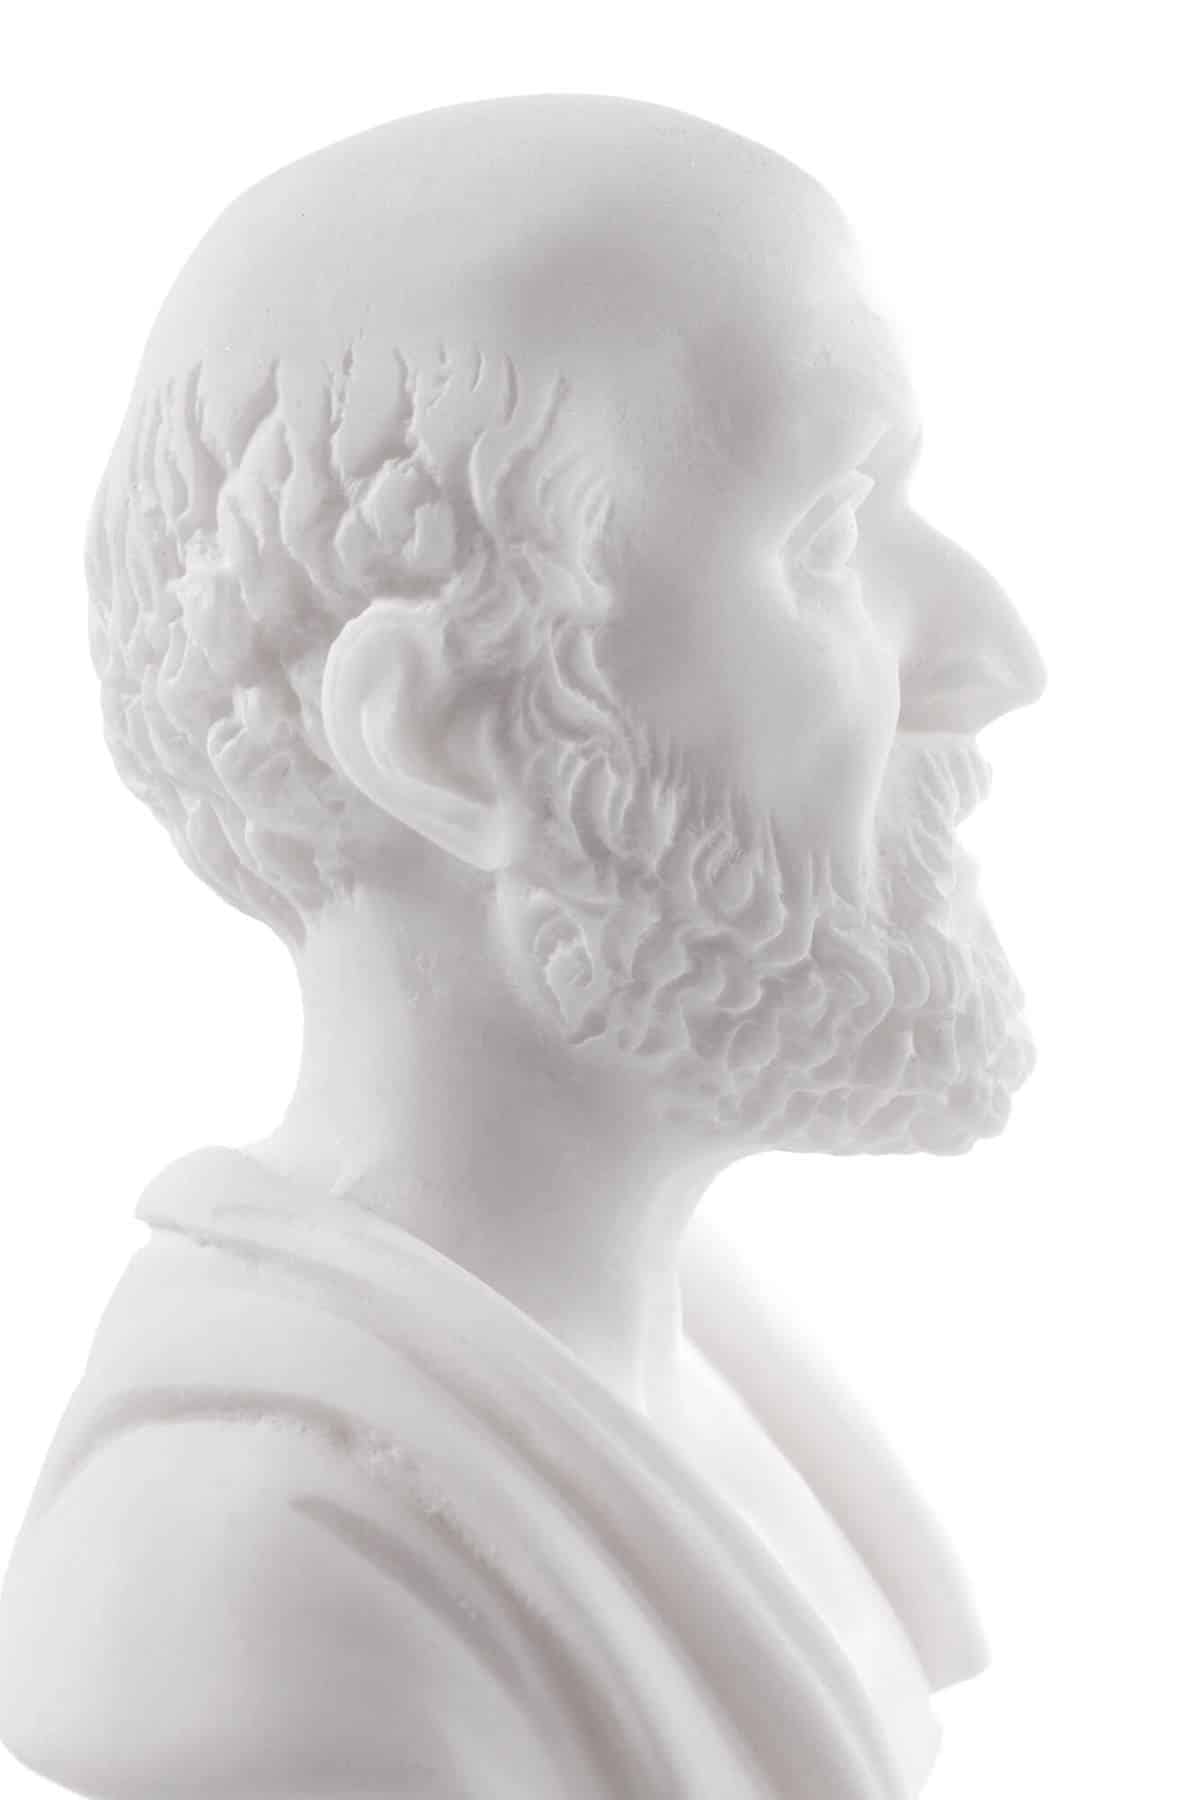 Hippocrates (460–380 B.C.E.) Ancient Greek physician